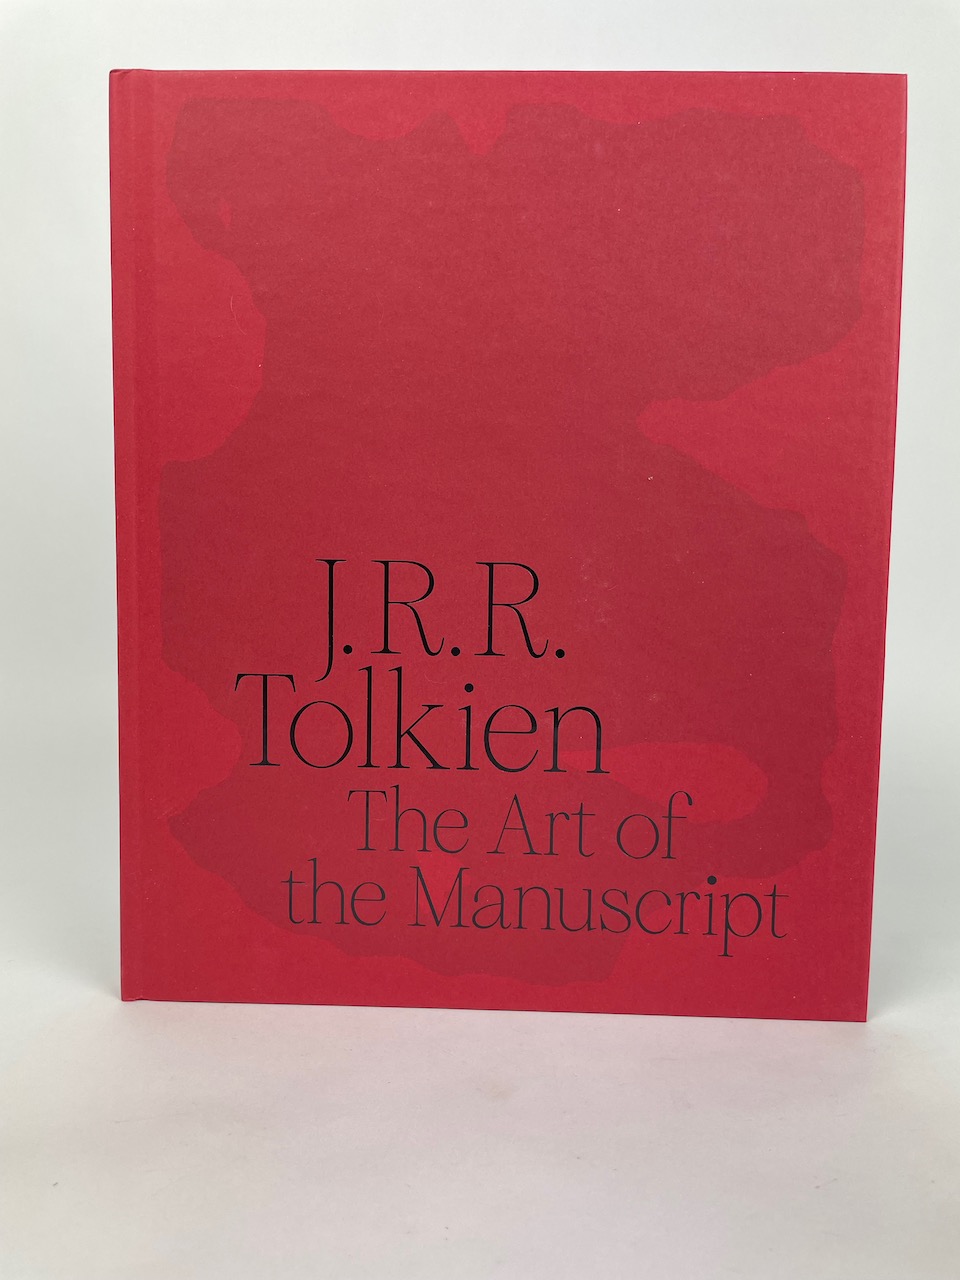 
J.R.R. Tolkien: The Art of the Manuscript - exhibition catalogue 1